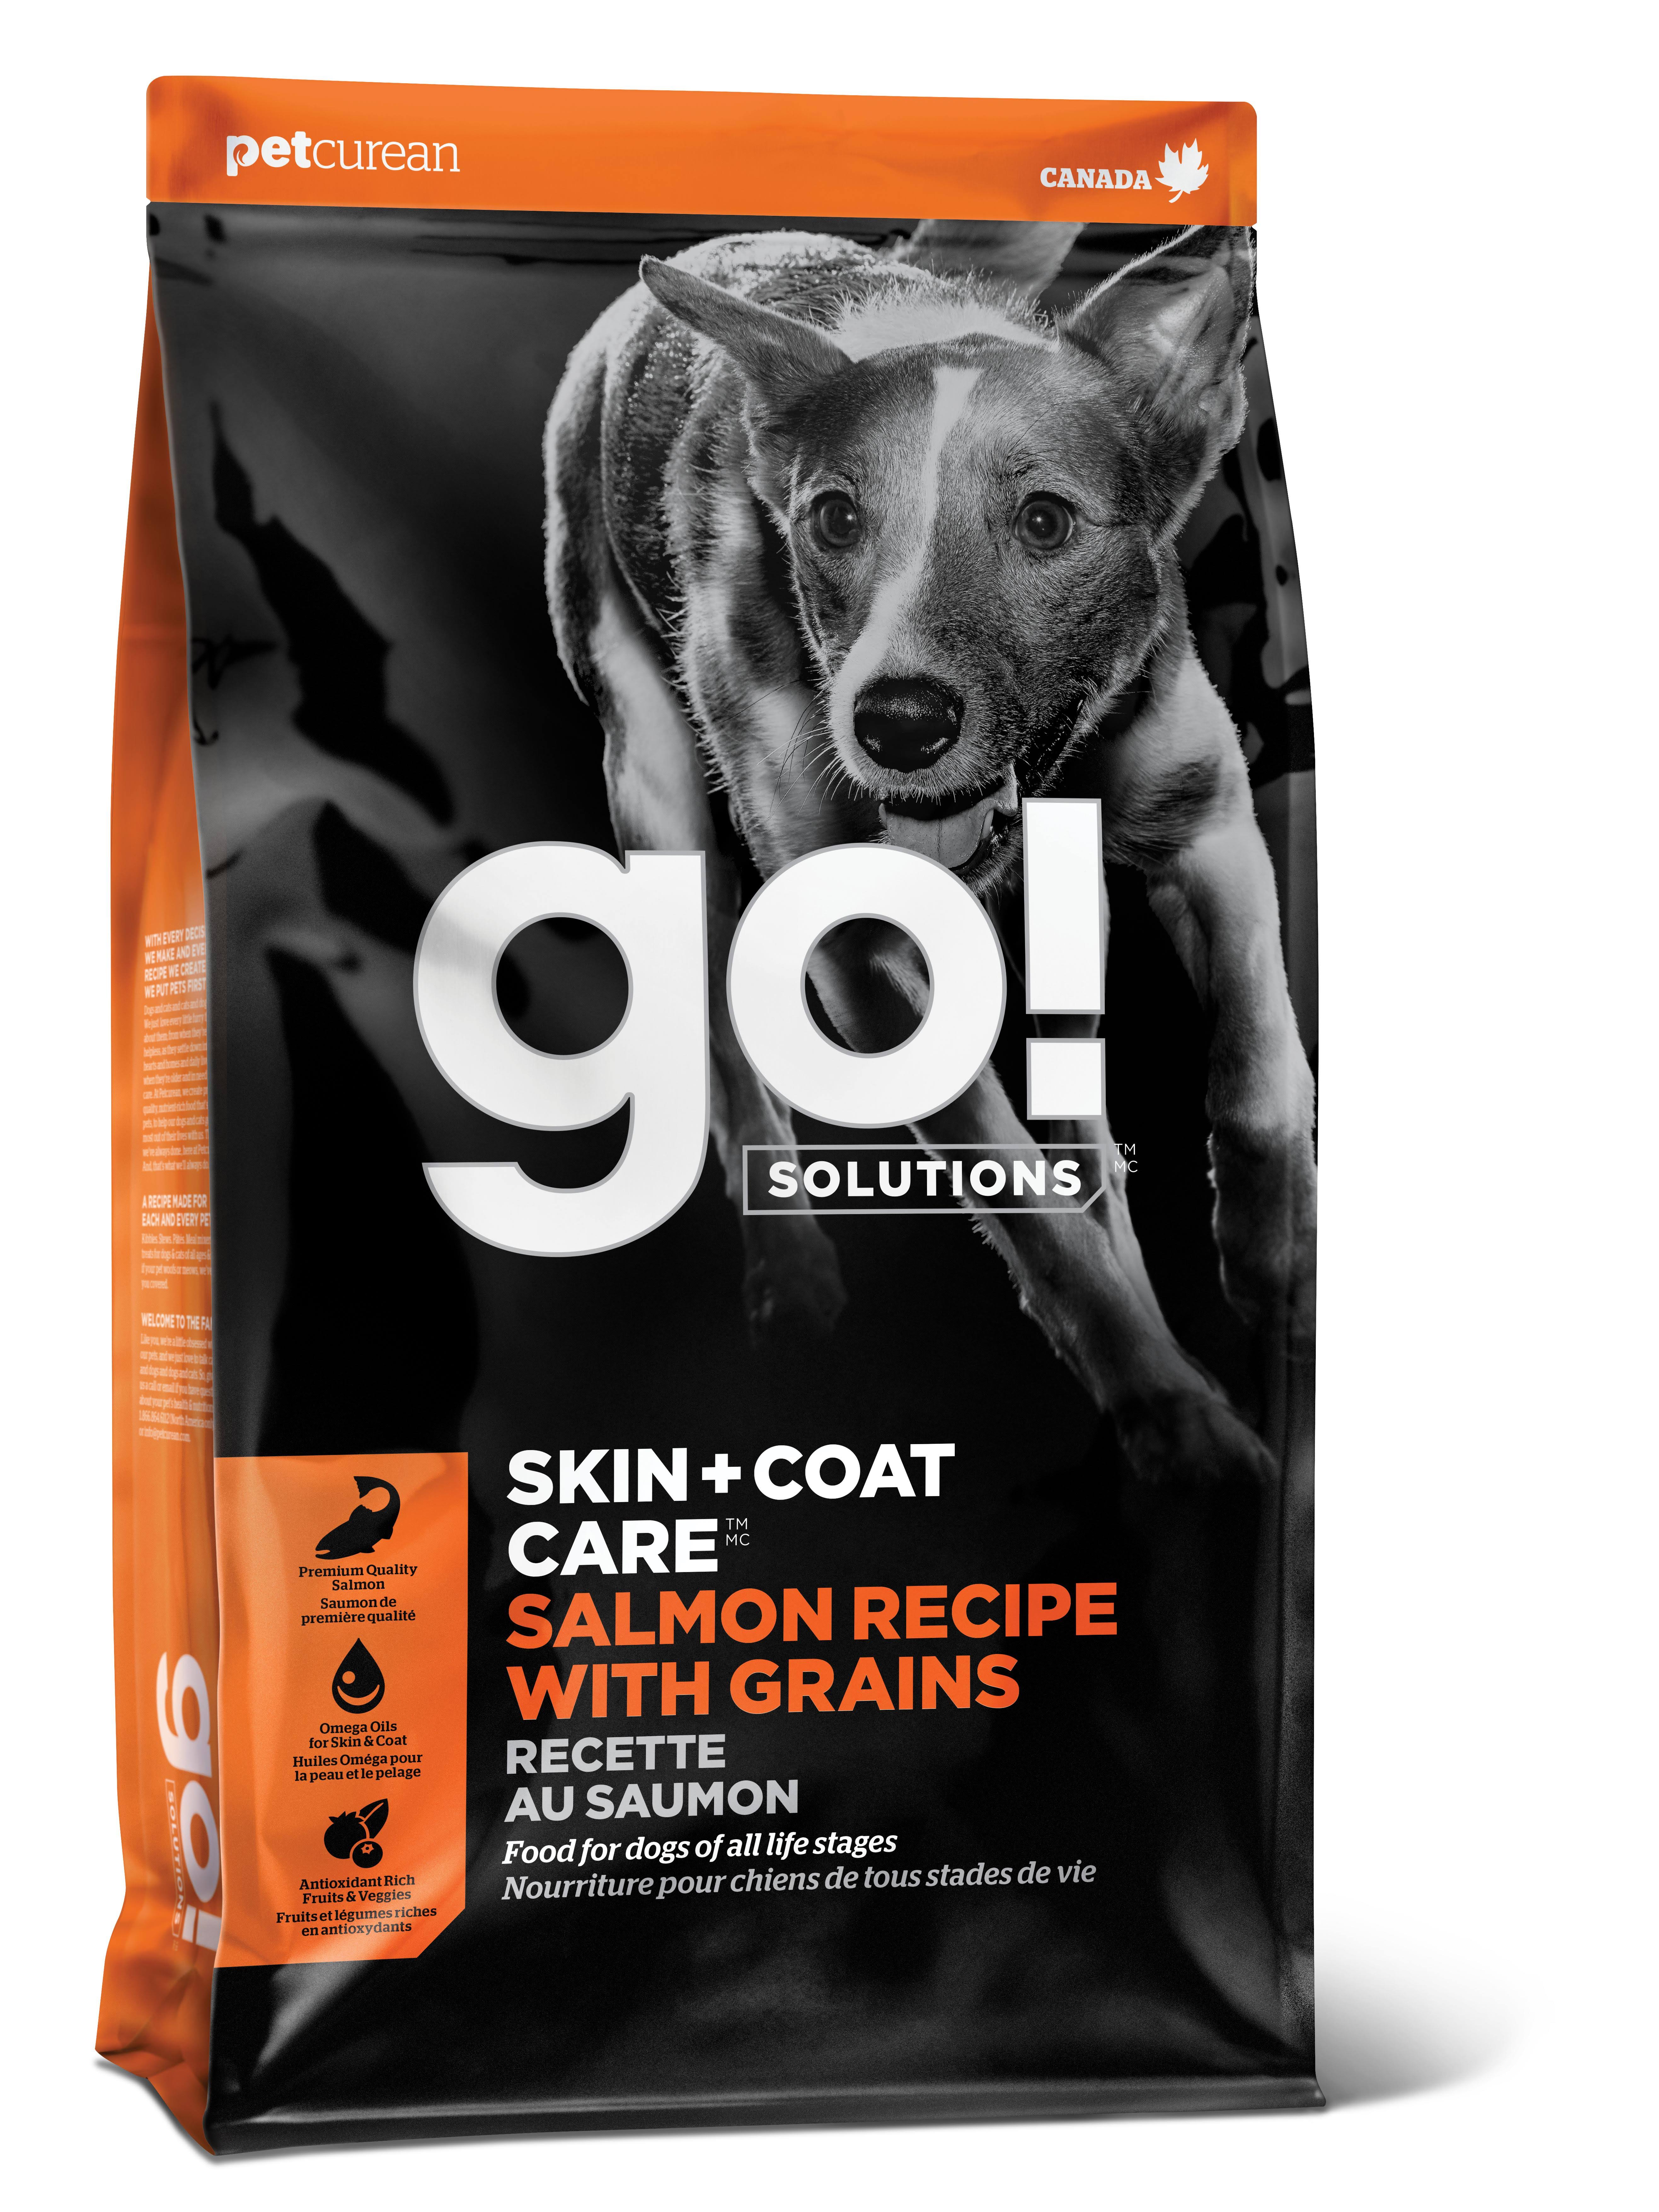 Go! Solutions Skin + Coat Care Salmon Dog Food [3.5lb]